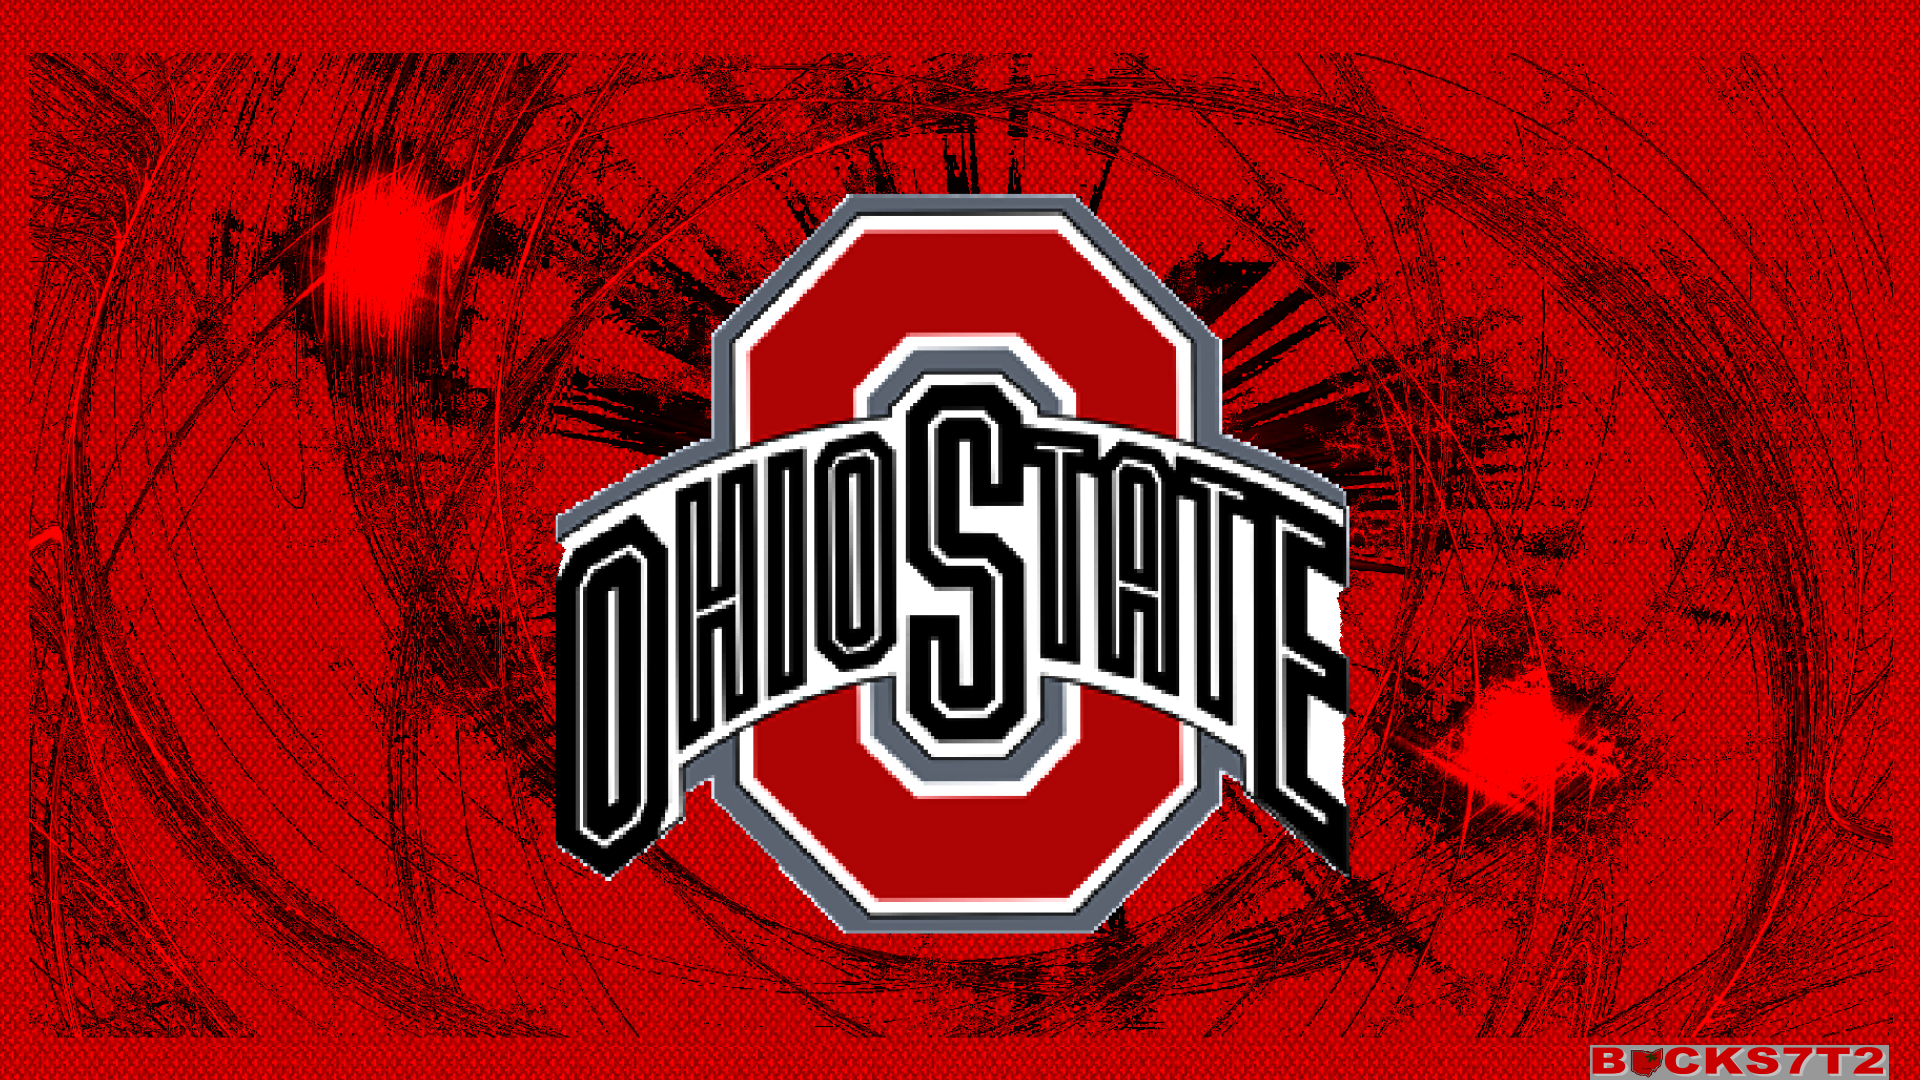 Free download RED BLOCK O OHIO STATE Ohio State University Basketball